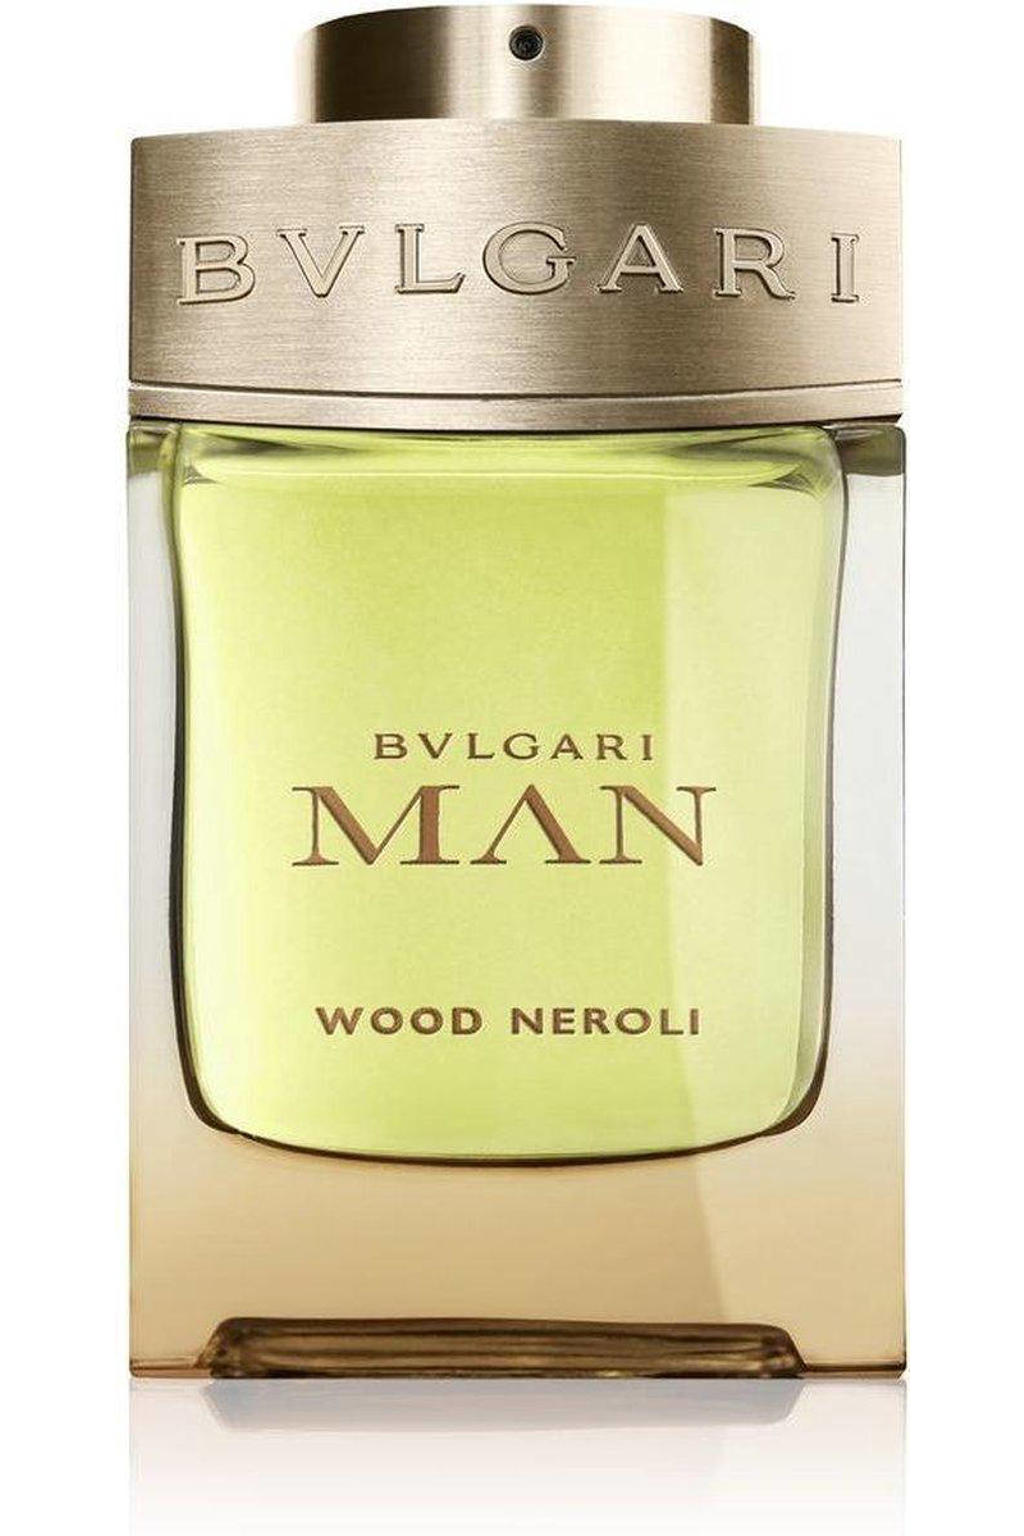 Bvlgari Man Wood Neroli eau de parfum - 100 ml